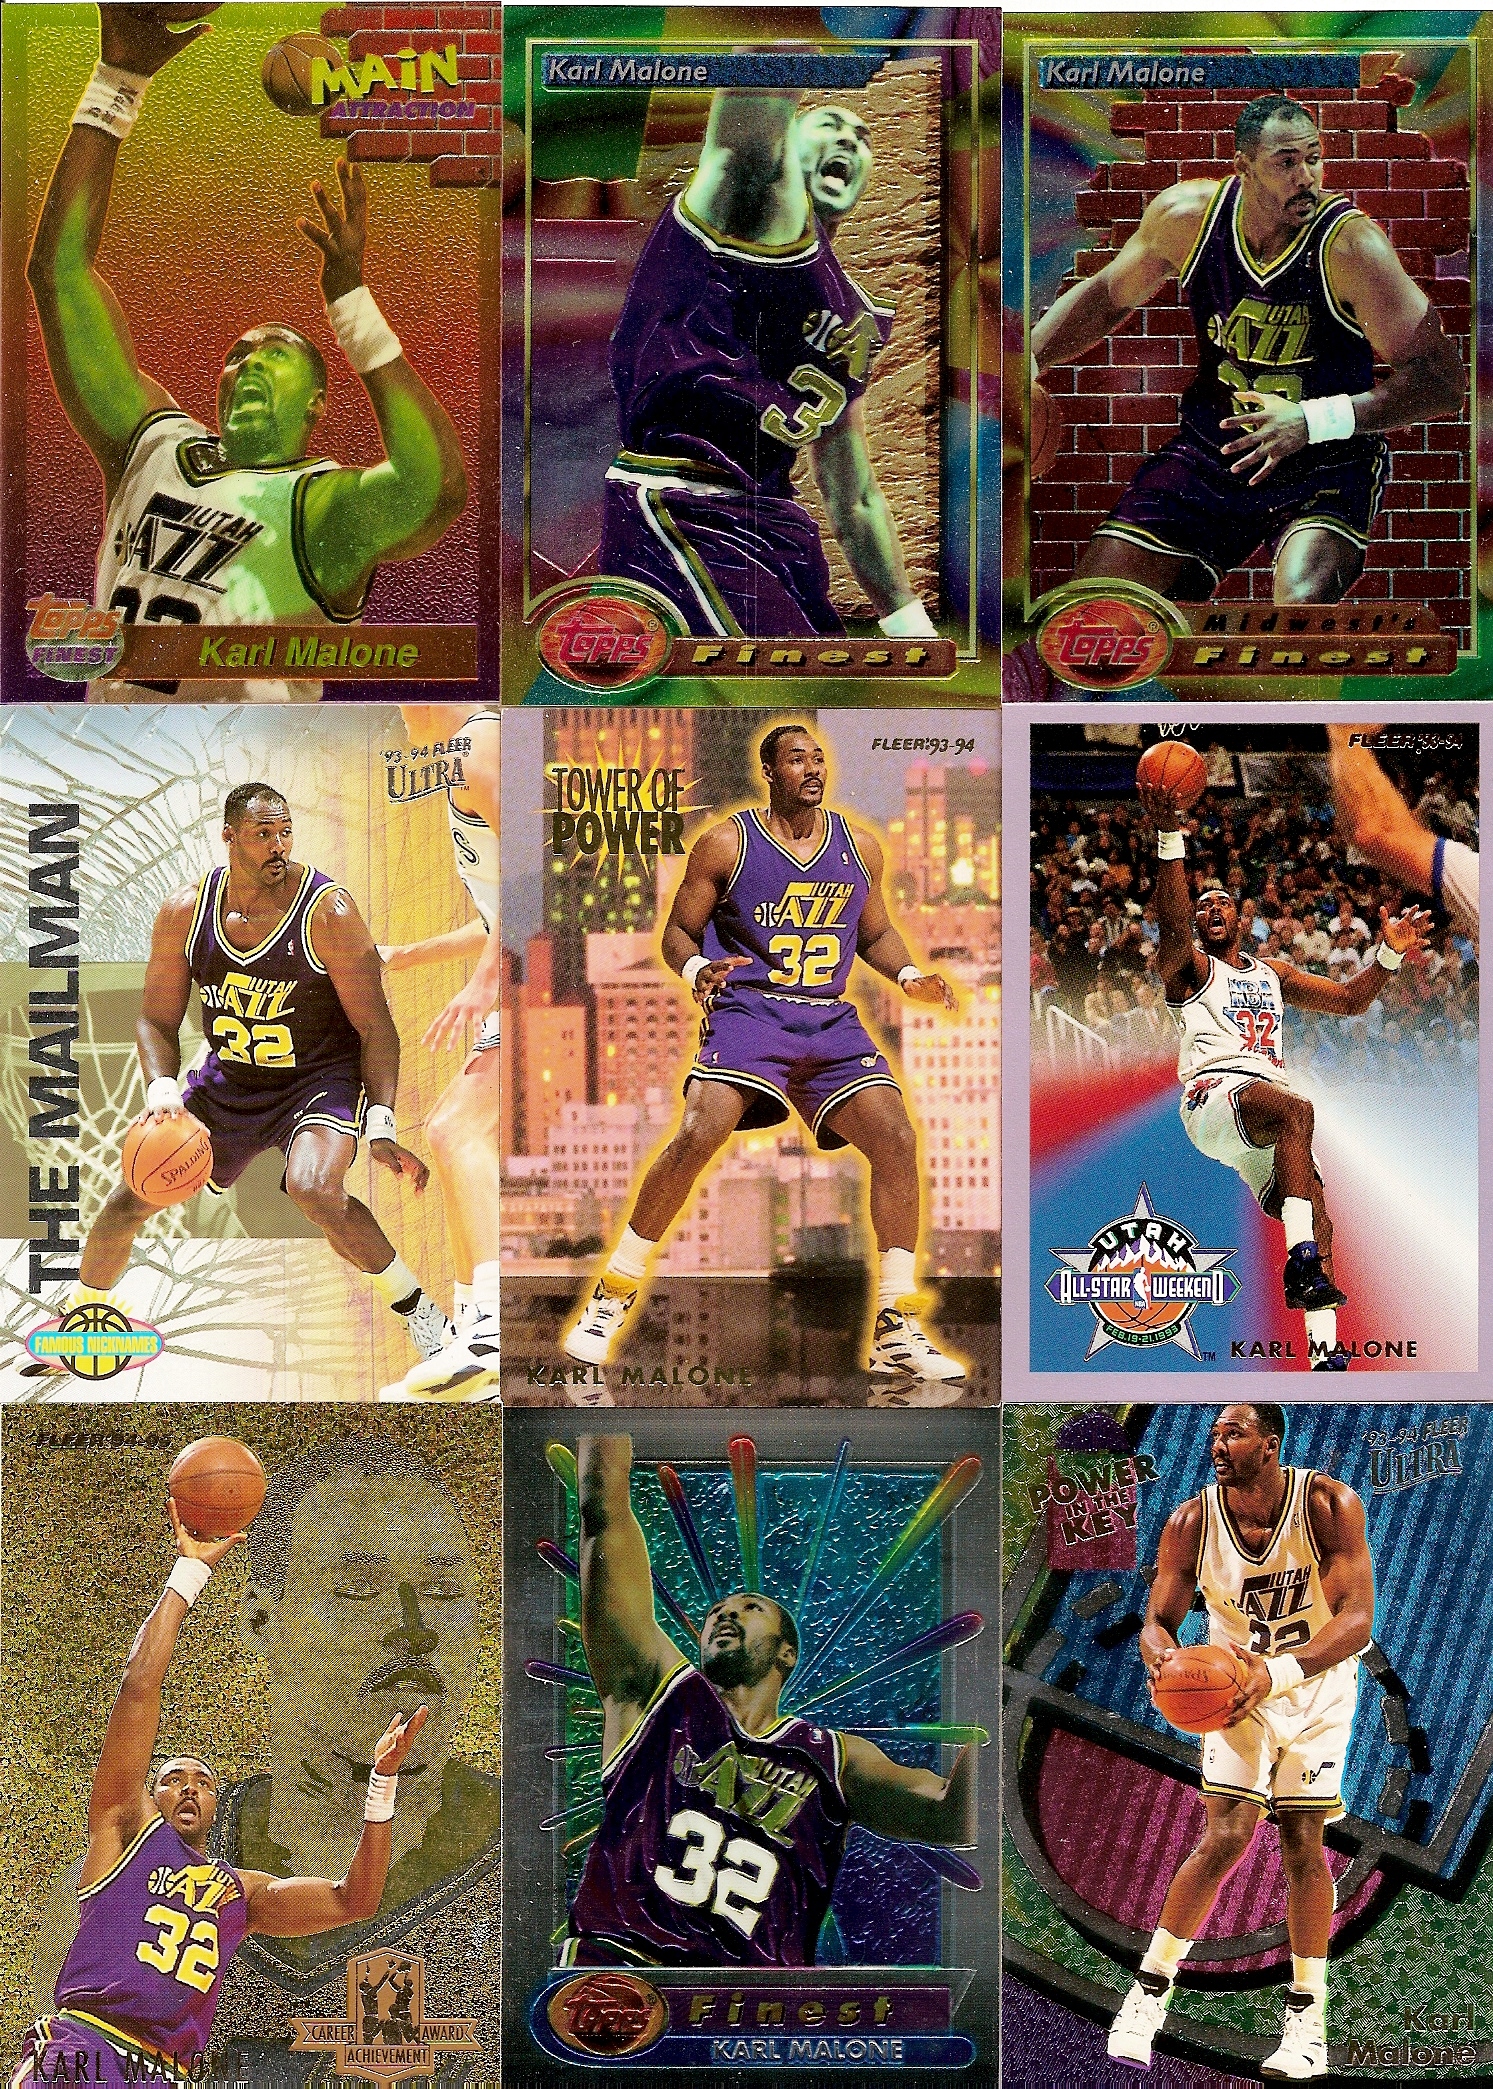  1998-99 Hoops Shout Outs #14 Shawn Kemp NBA Basketball